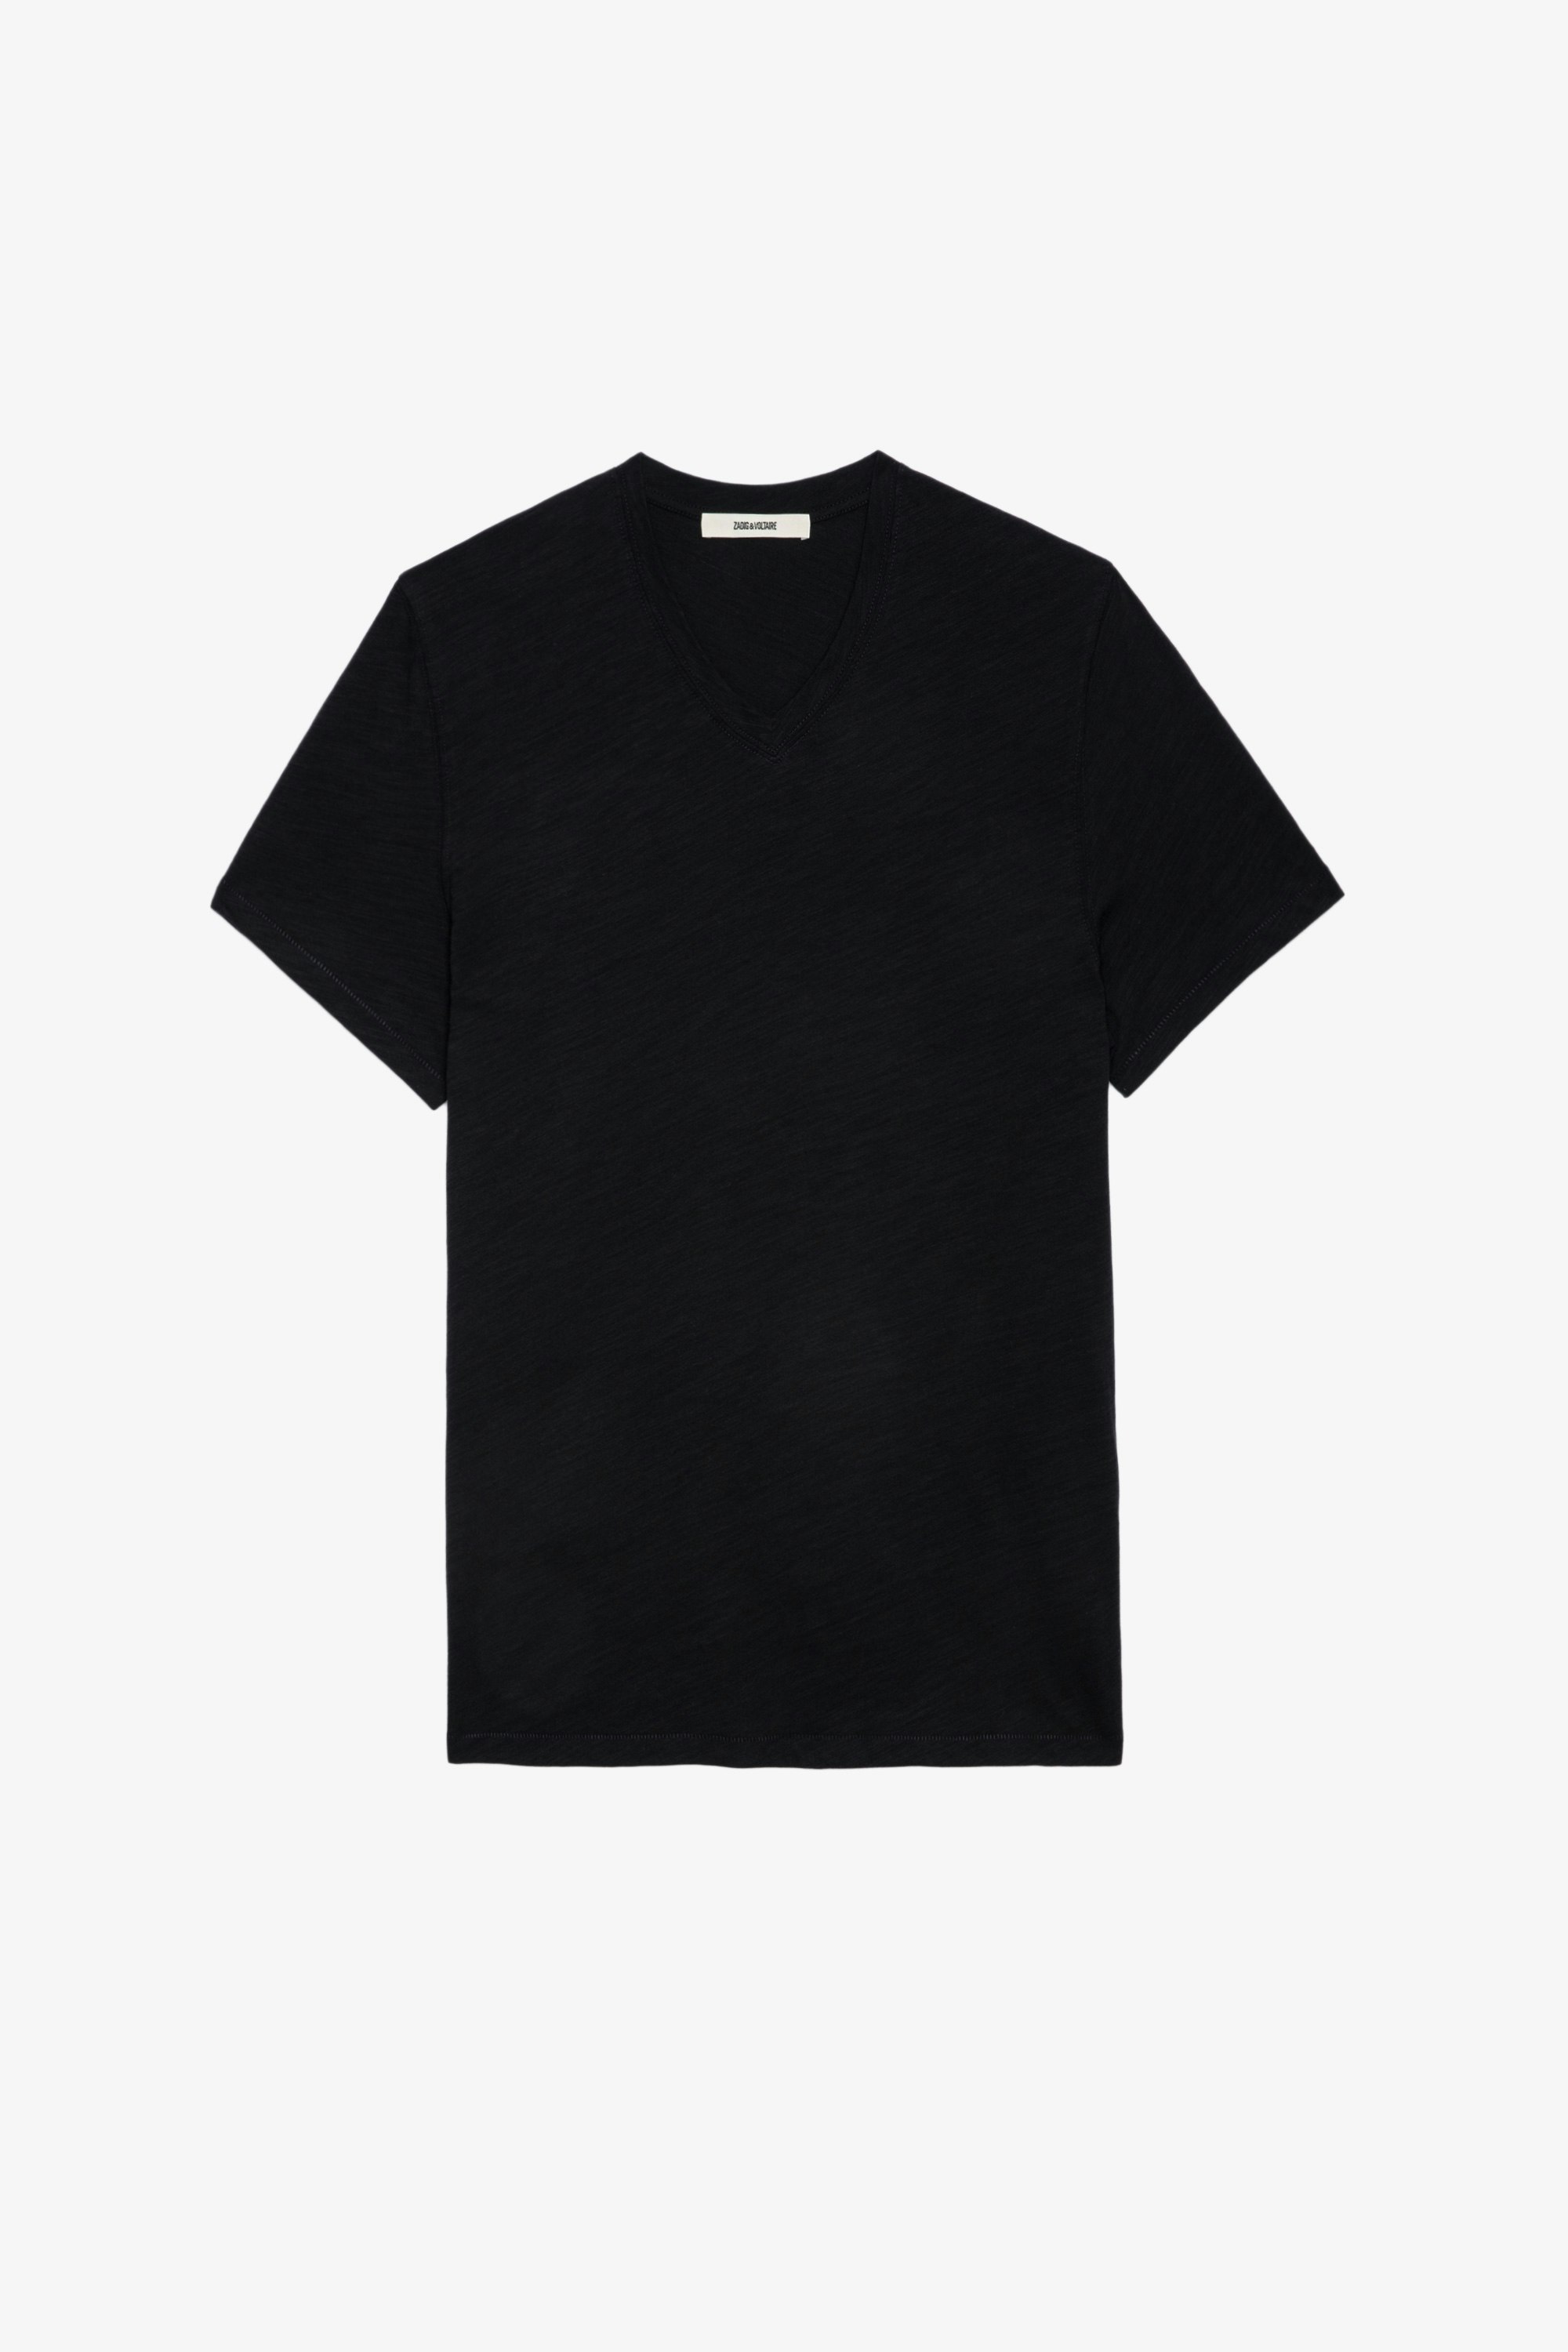 Camiseta Stocky Flamme Camiseta negra jaspeada Stocky para hombre